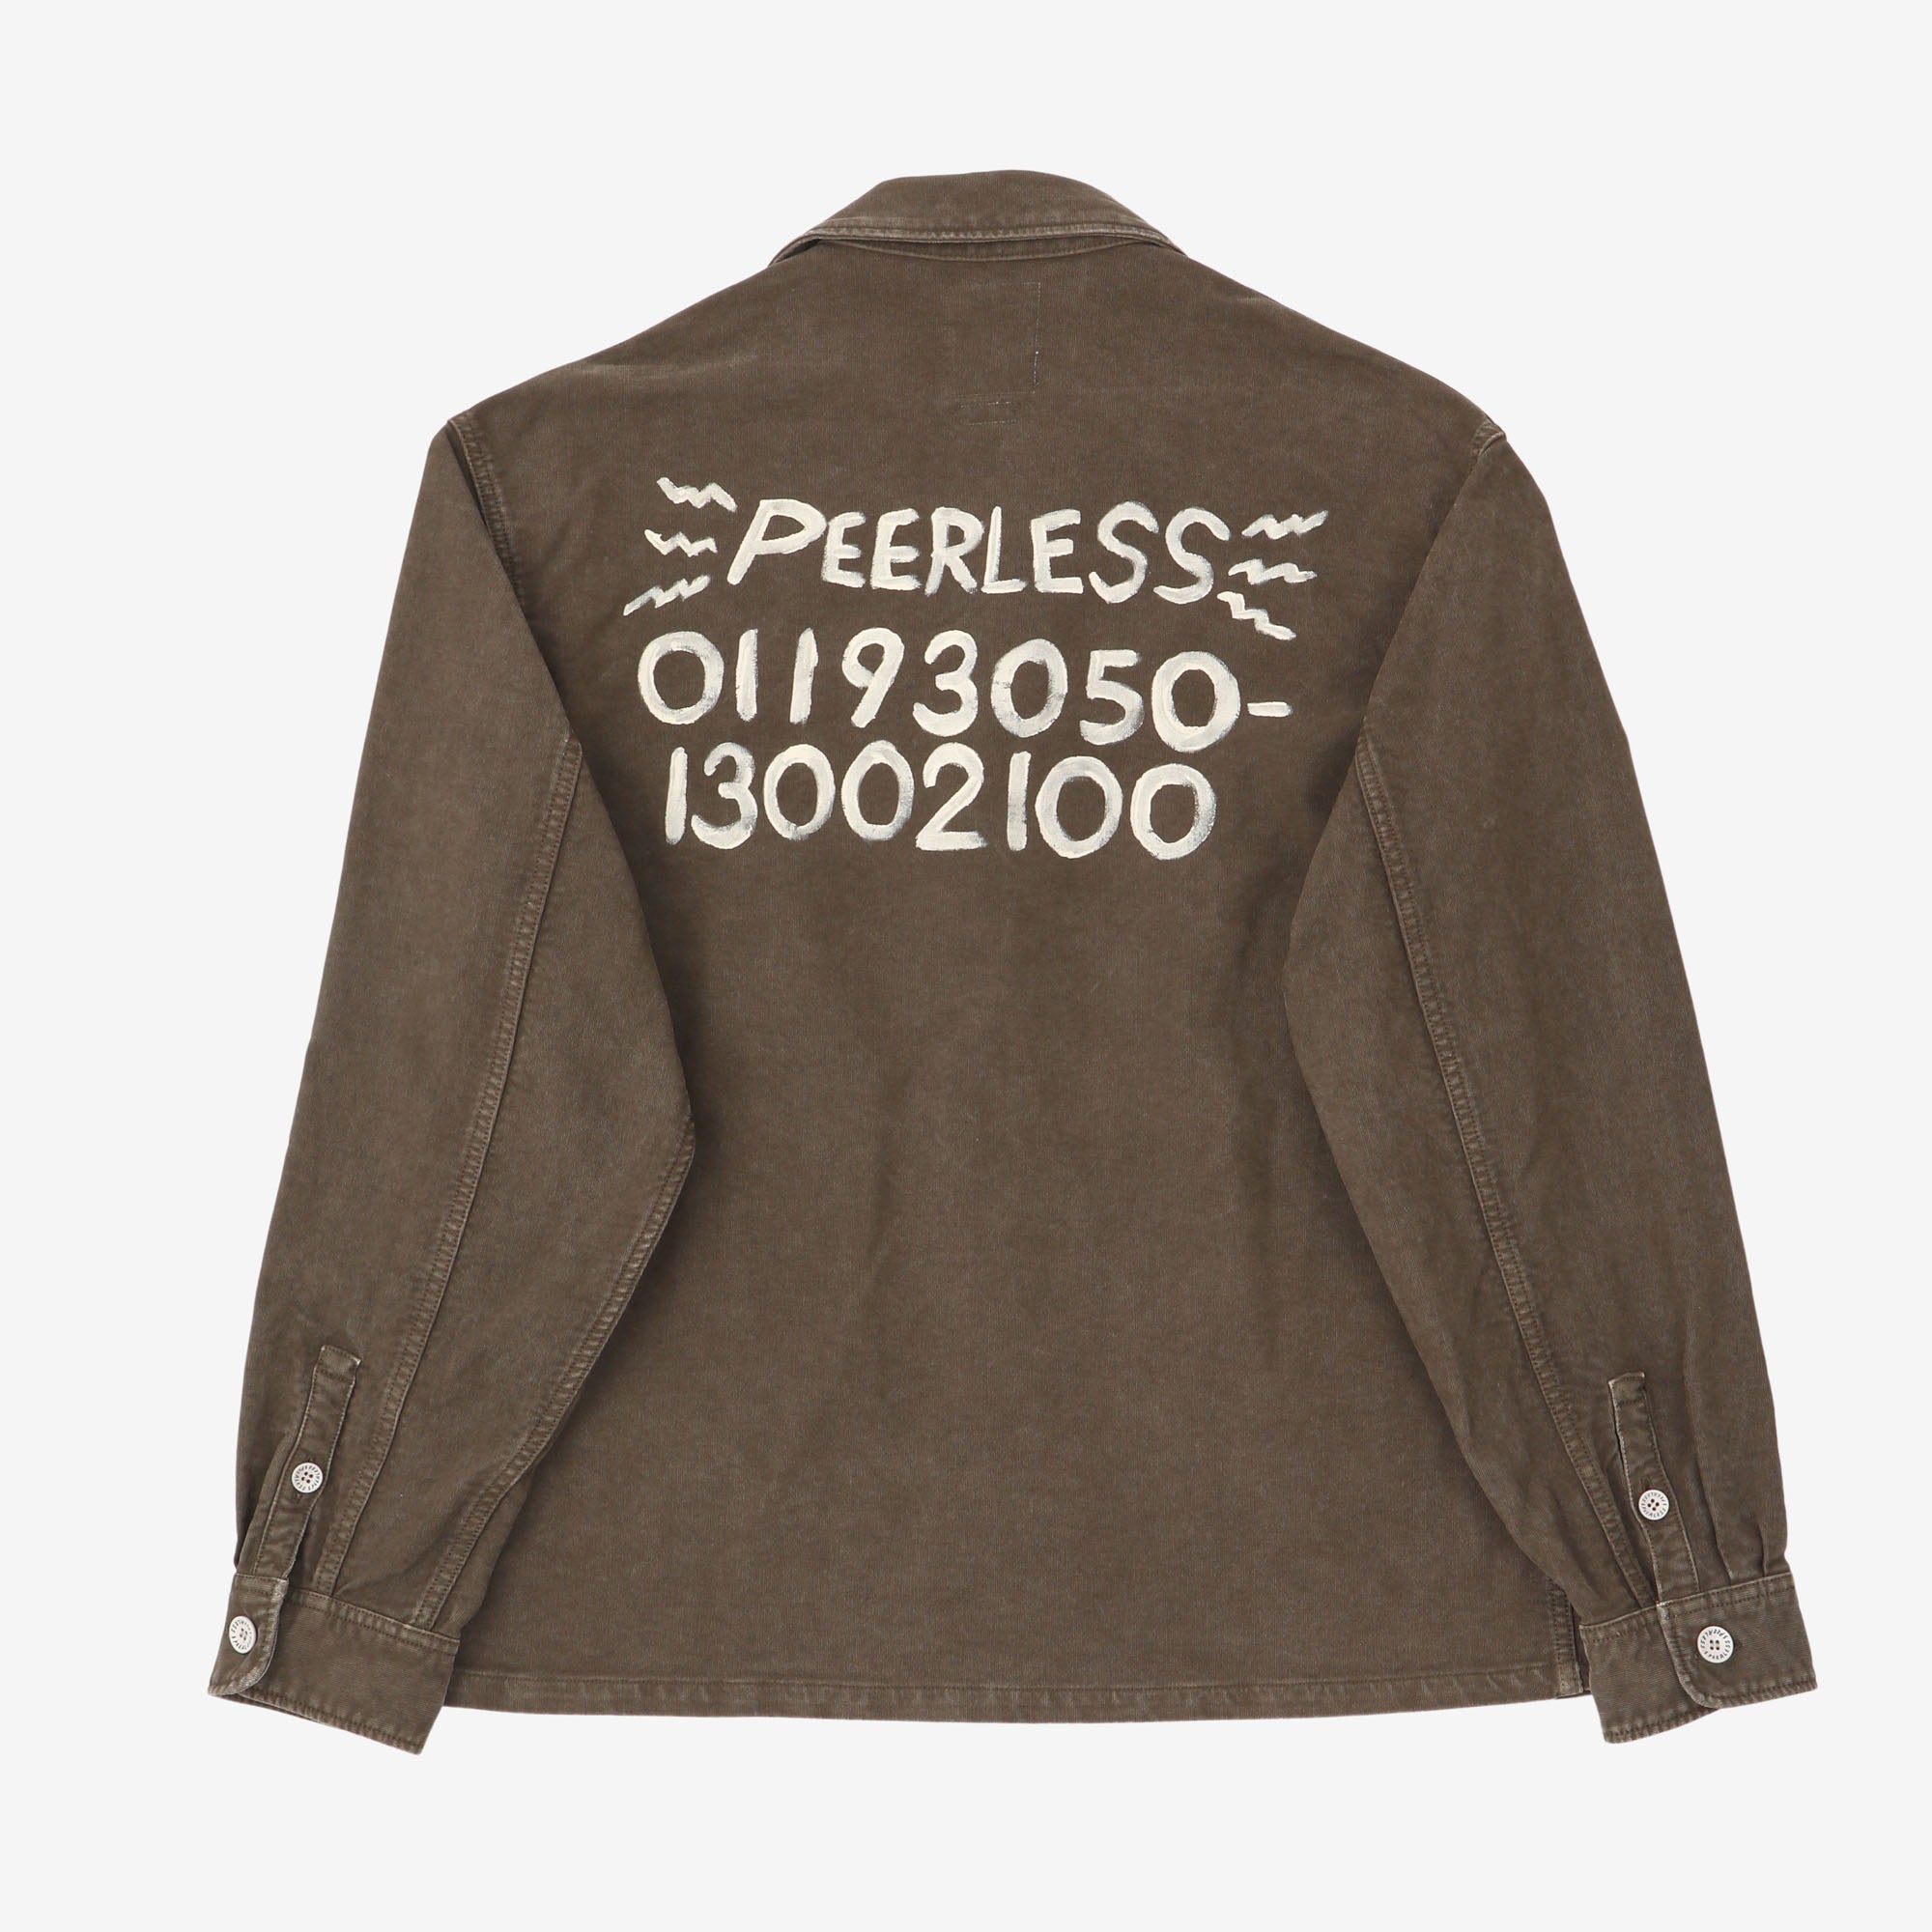 Peerless Domain Shirt Jacket